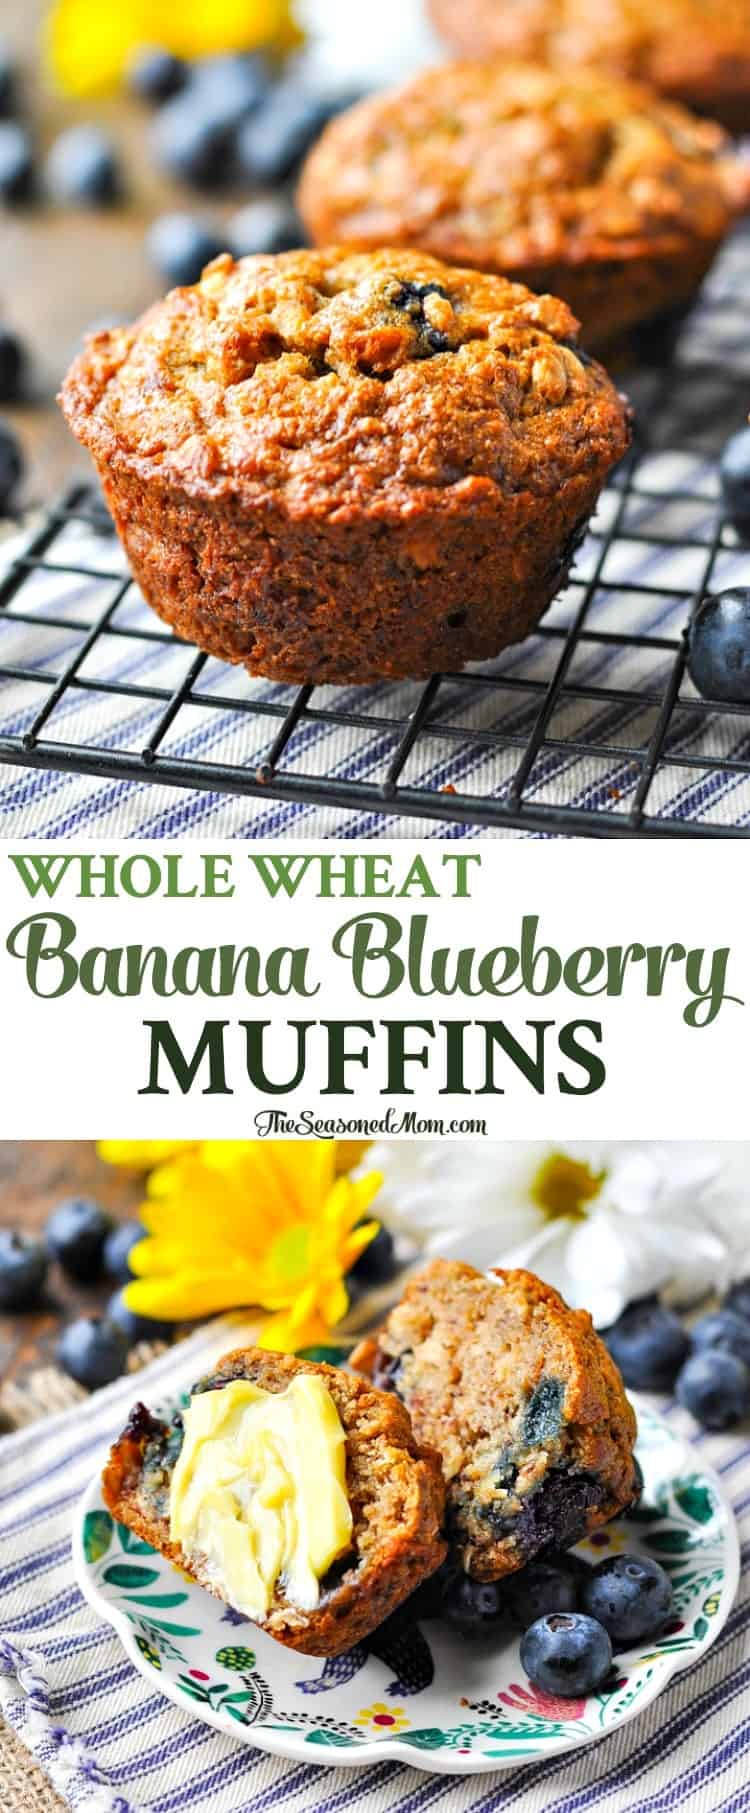 Whole Wheat Banana Blueberry Muffins - The Seasoned Mom